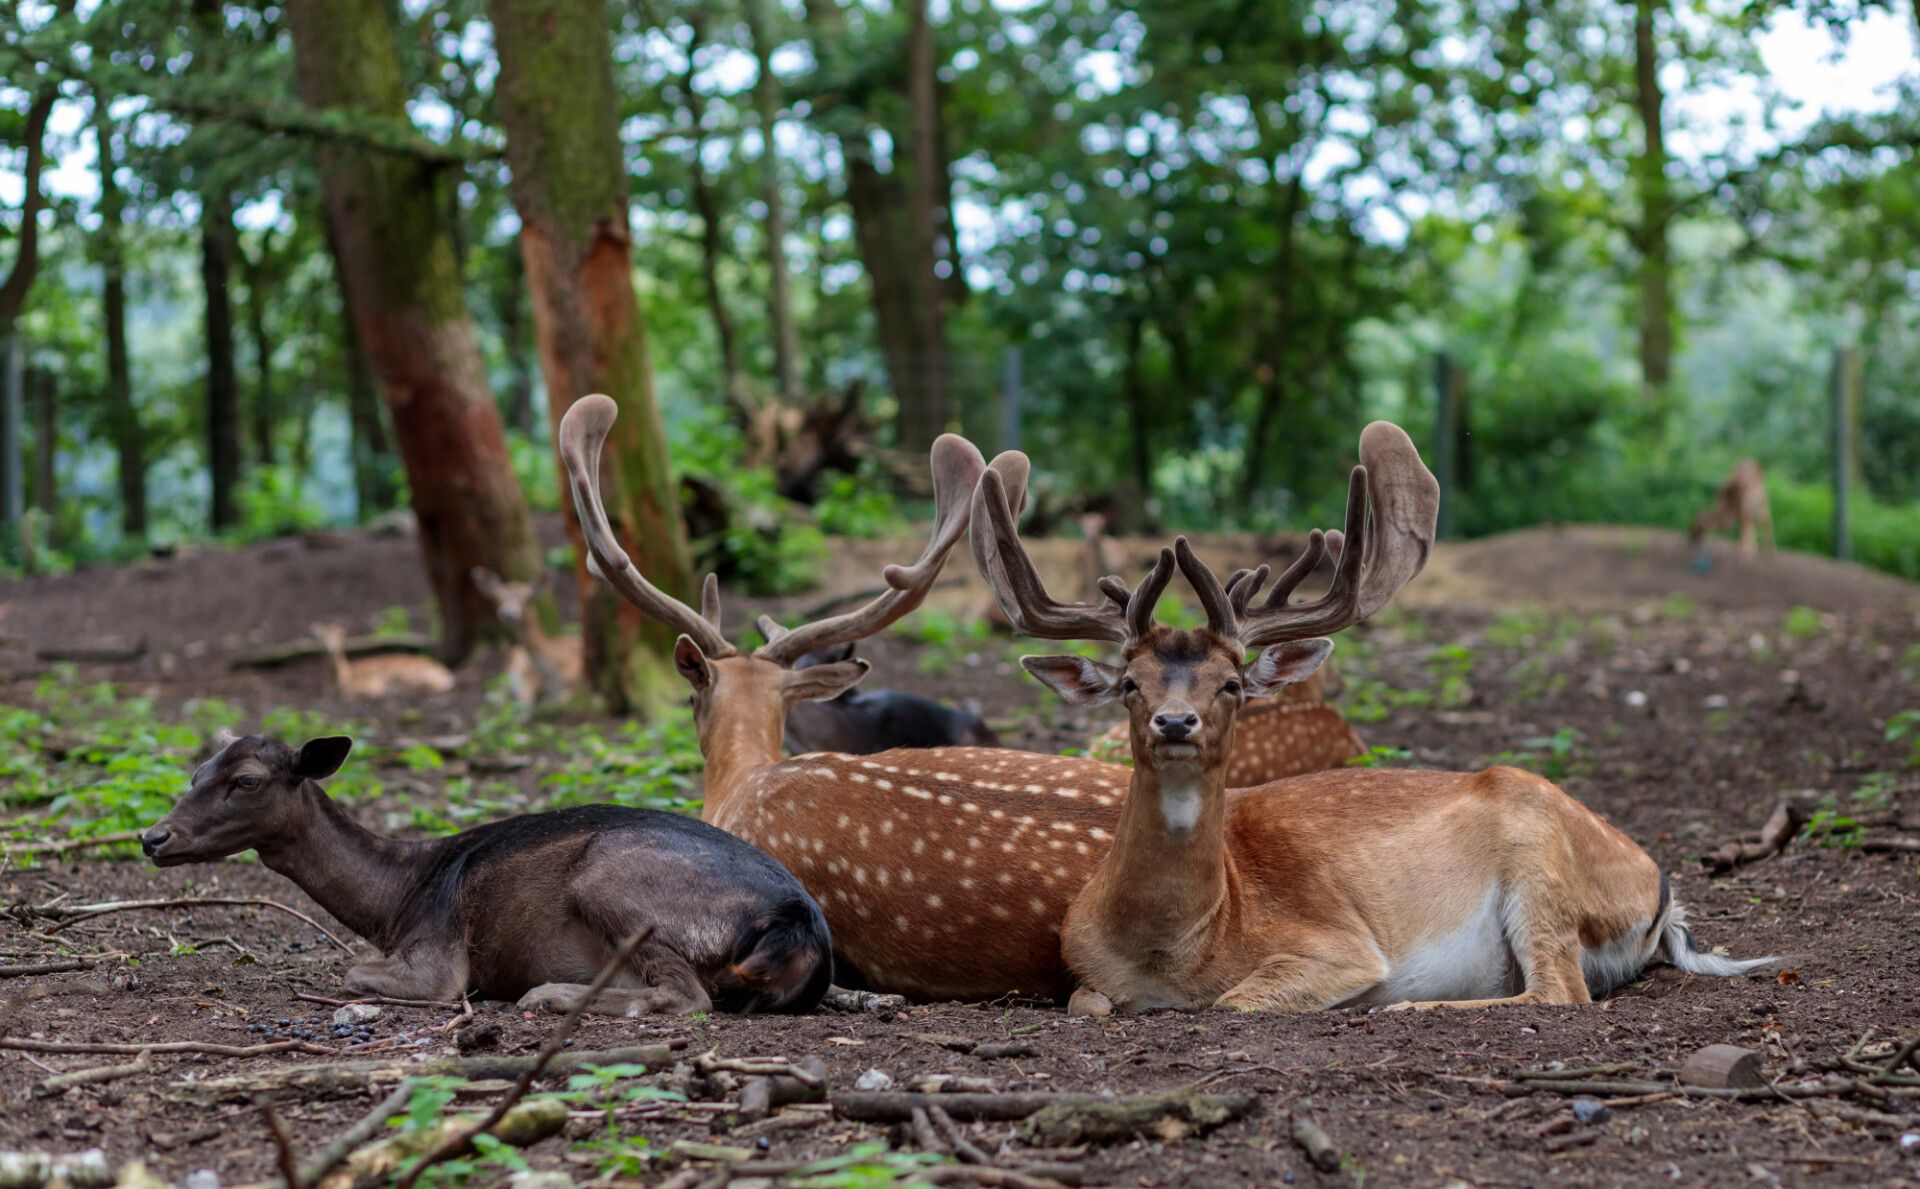 Herd of deer lying together on forest floor